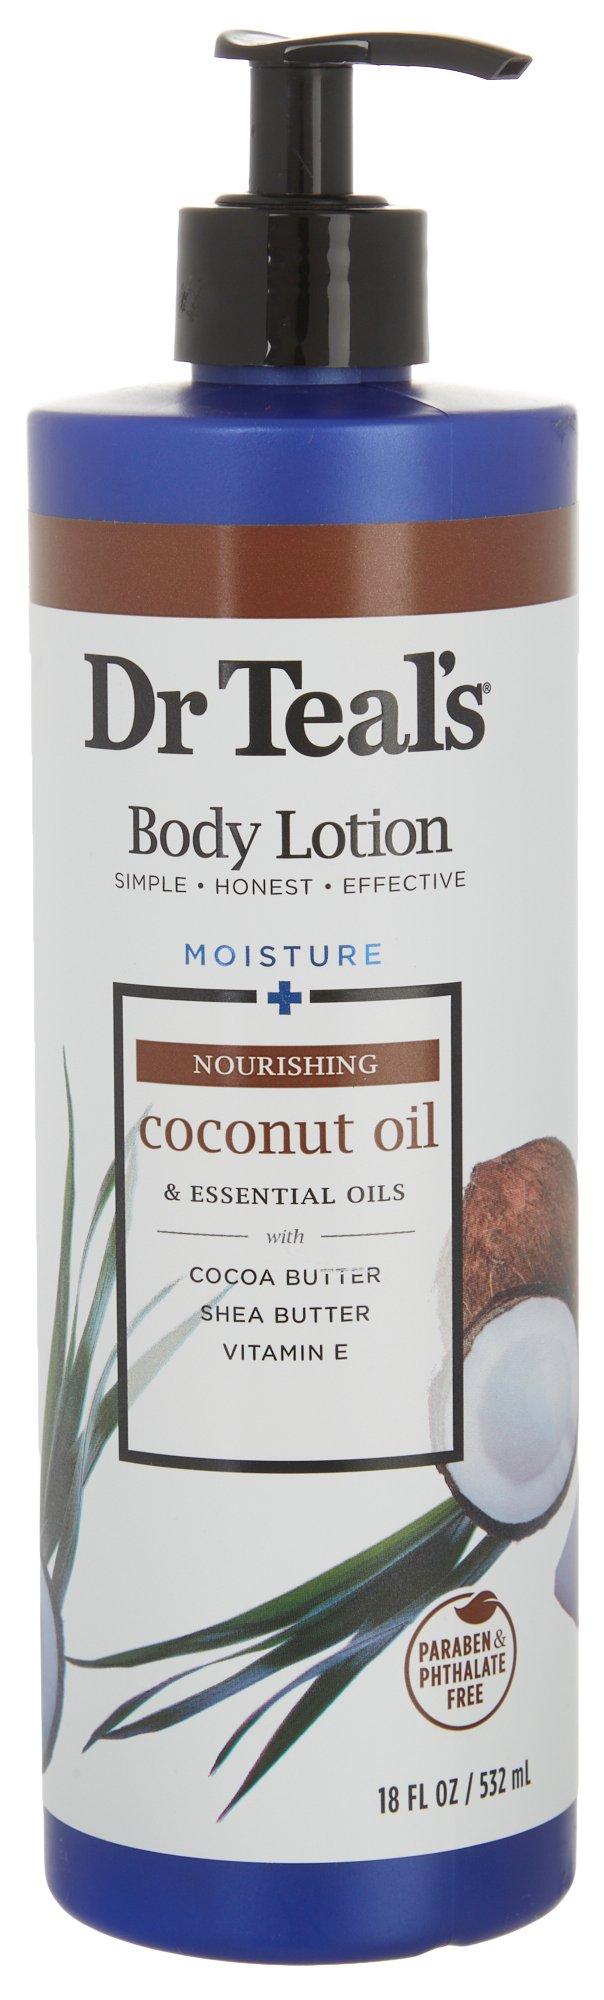 Dr Teals 18 Fl. Oz. Nourishing Coconut Oil Body Lotion